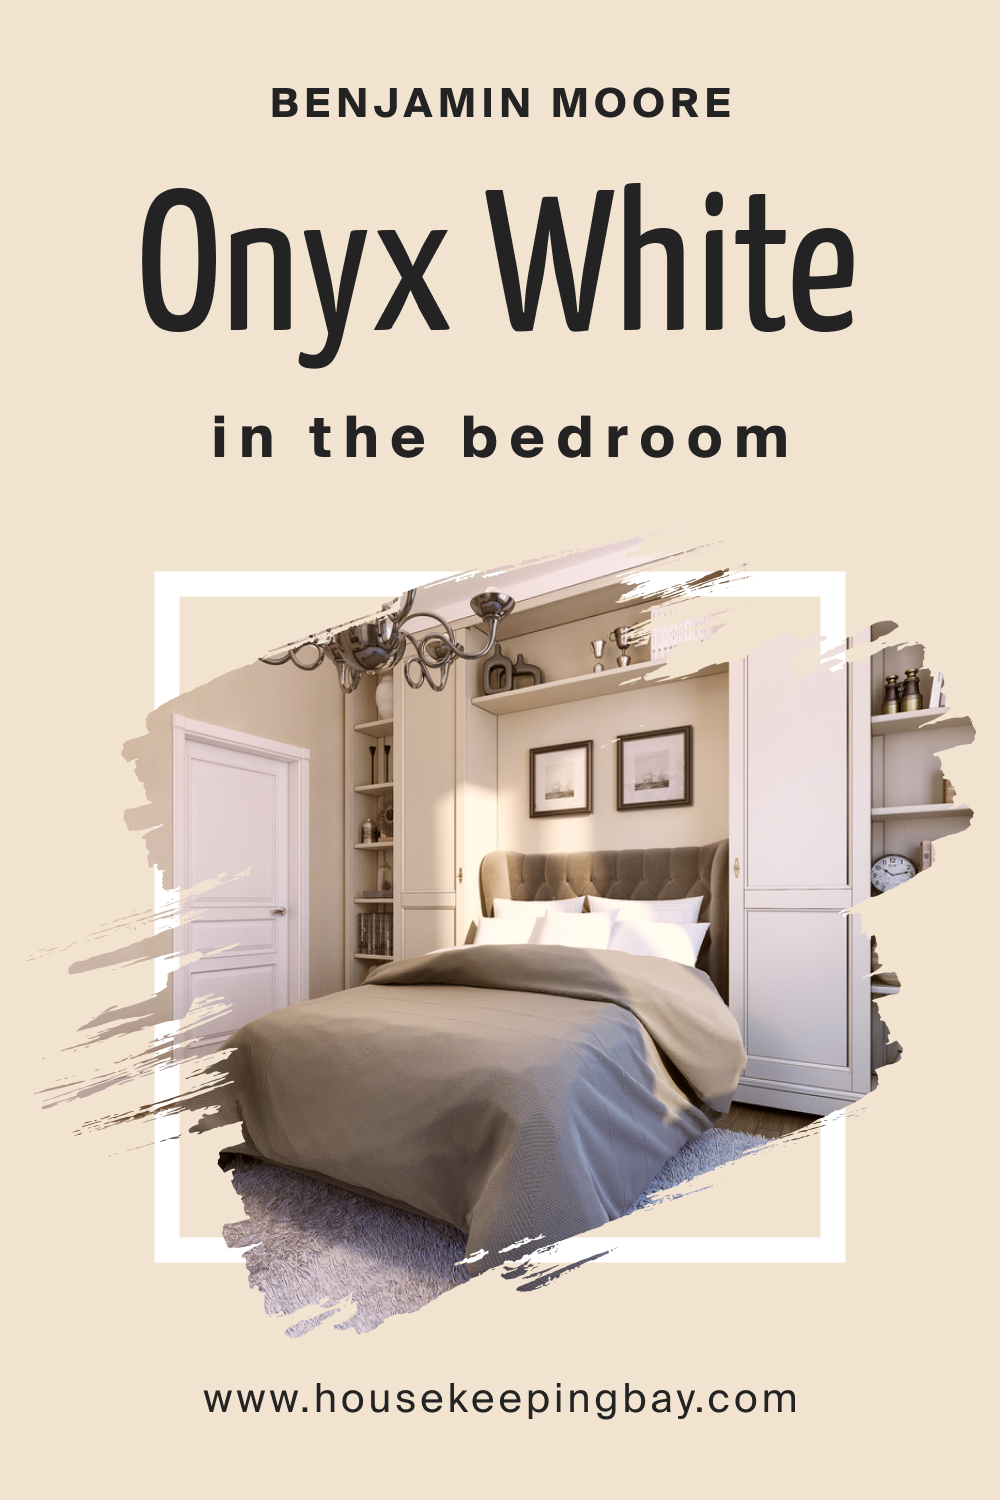 Benjamin Moore. Onyx White OC 74 for the Bedroom